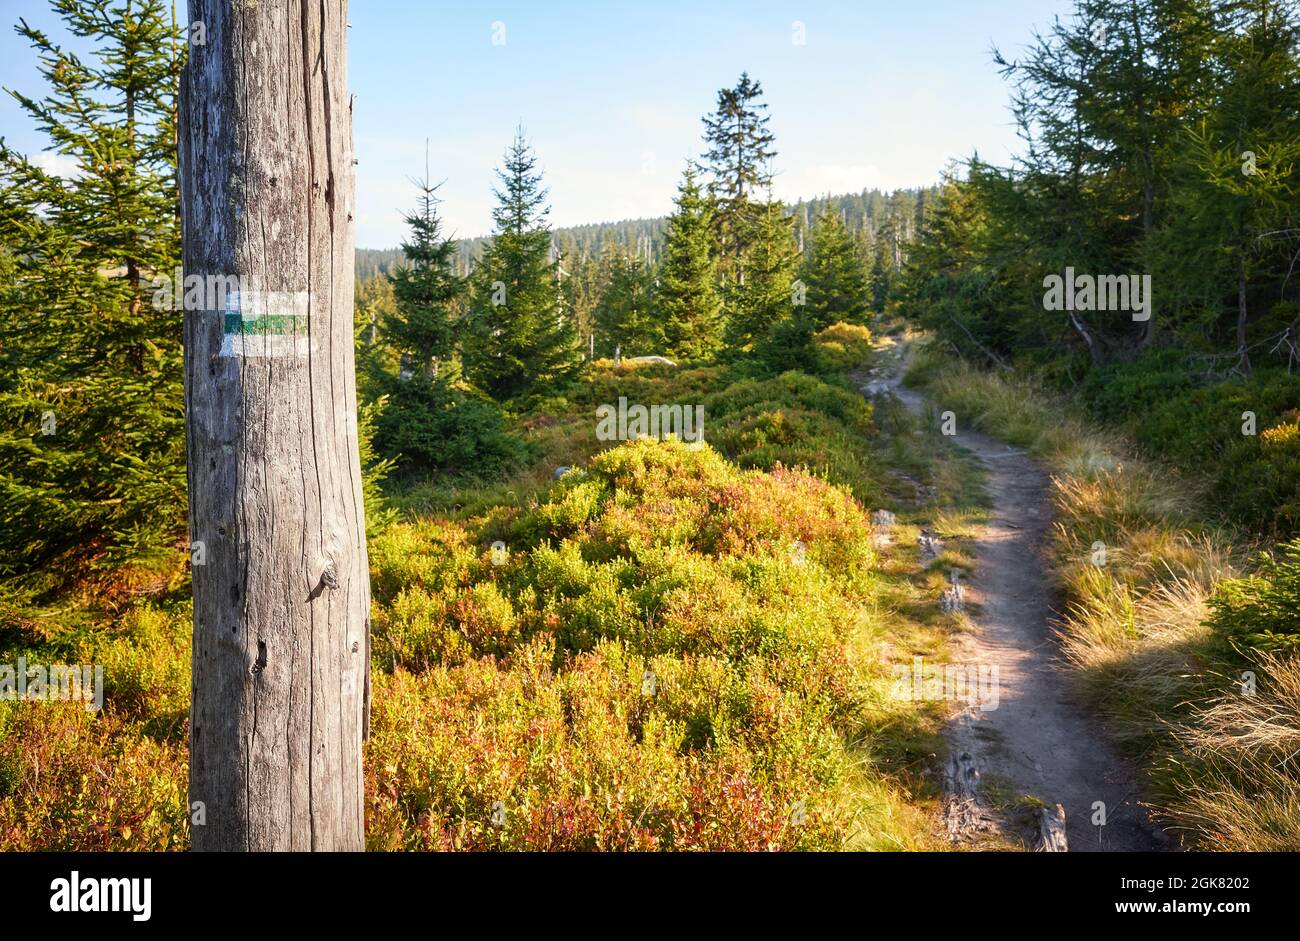 Trail marker on a tree stump, selective focus, Karkonosze National Park, Poland. Stock Photo